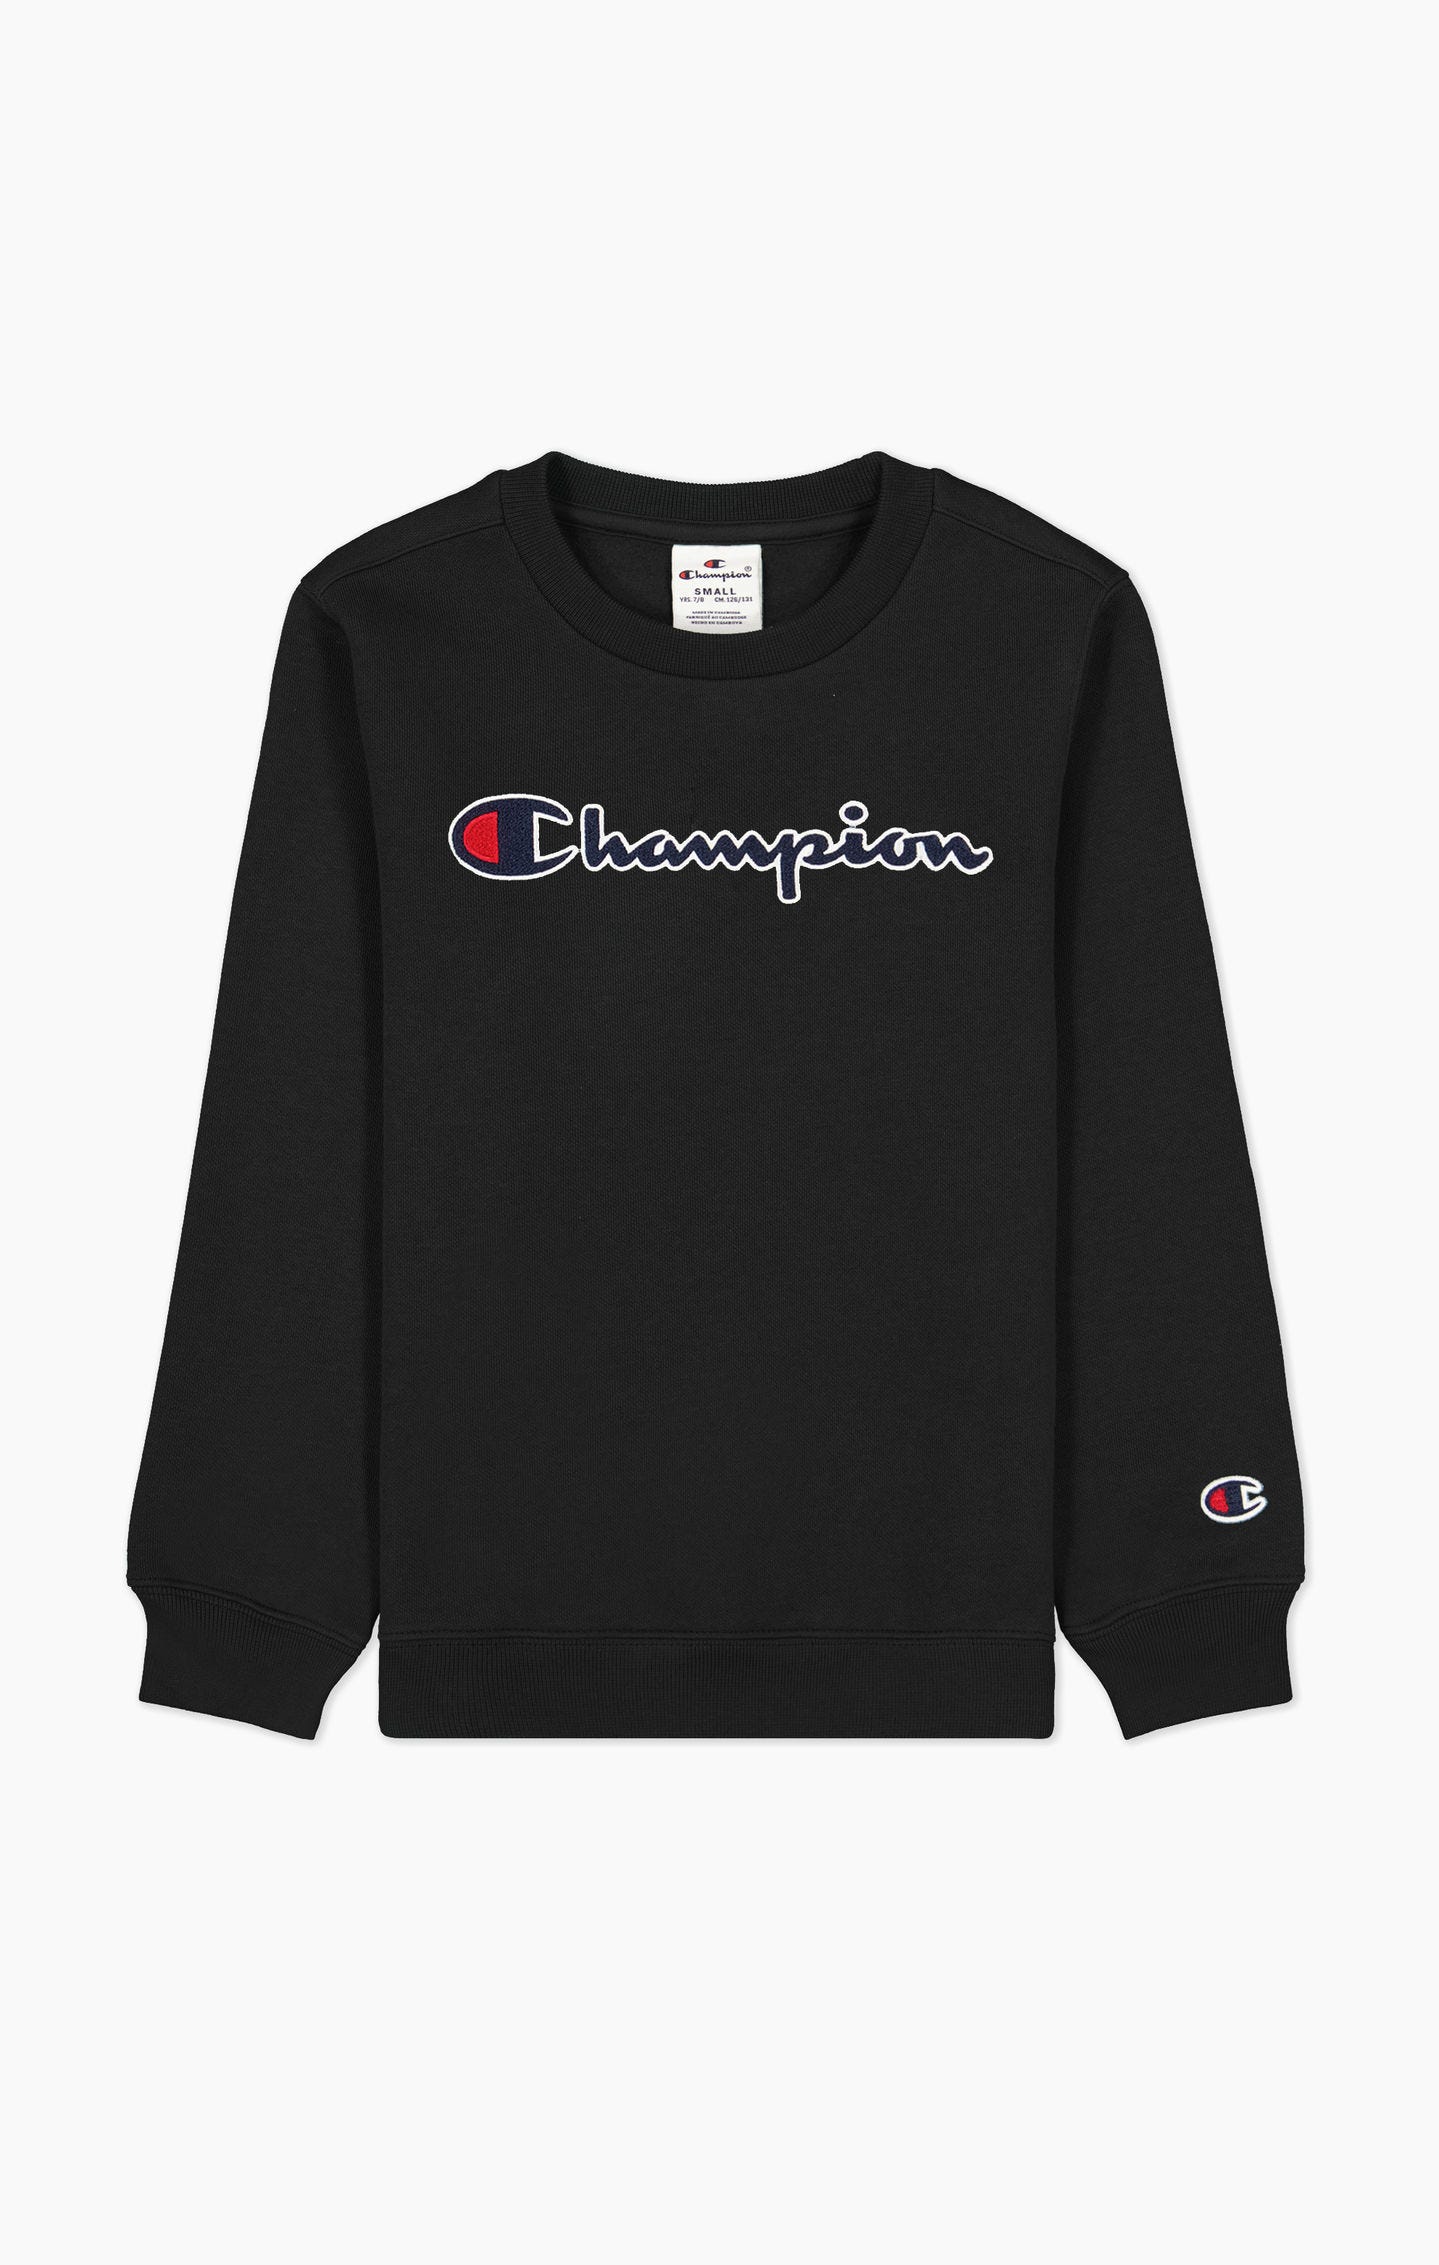 Sweatshirt à logo Champion brodé - Garçons